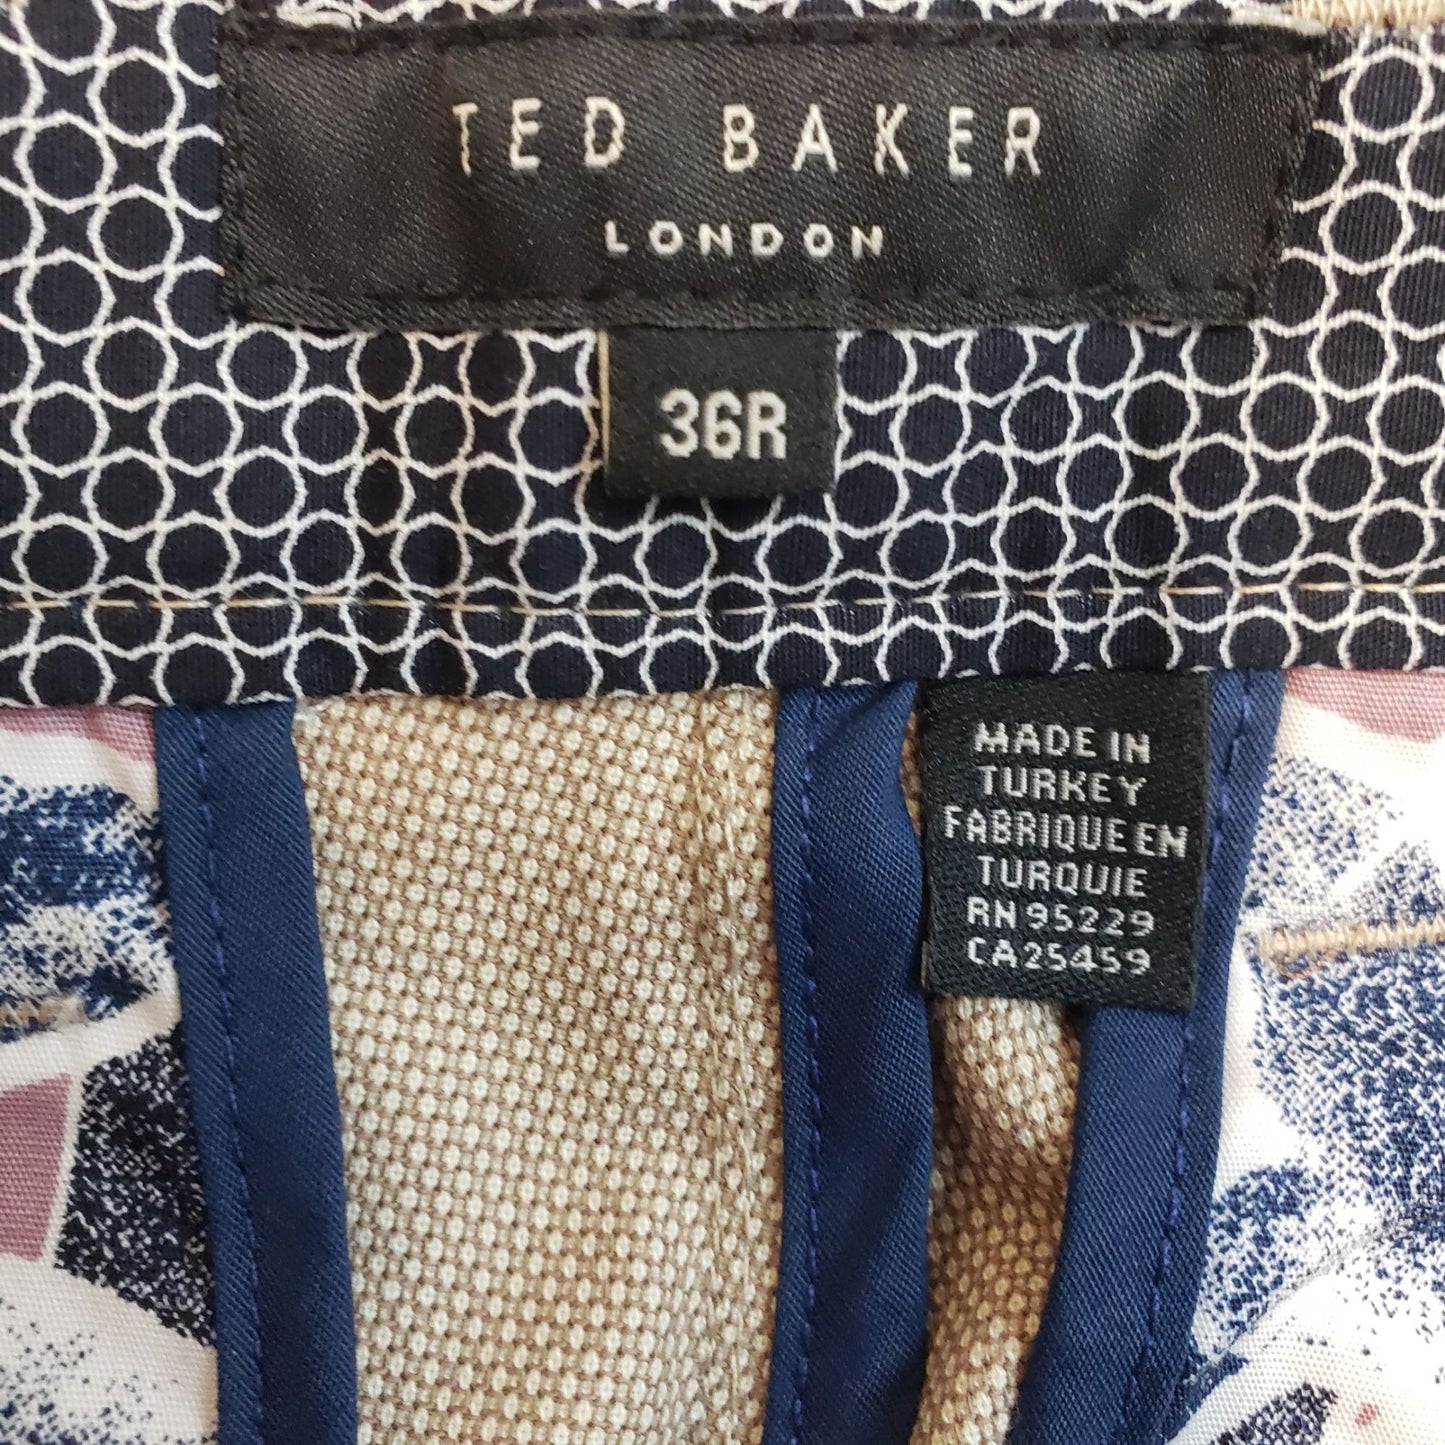 Ted Baker London Penguin Pants in Sand Size 36R